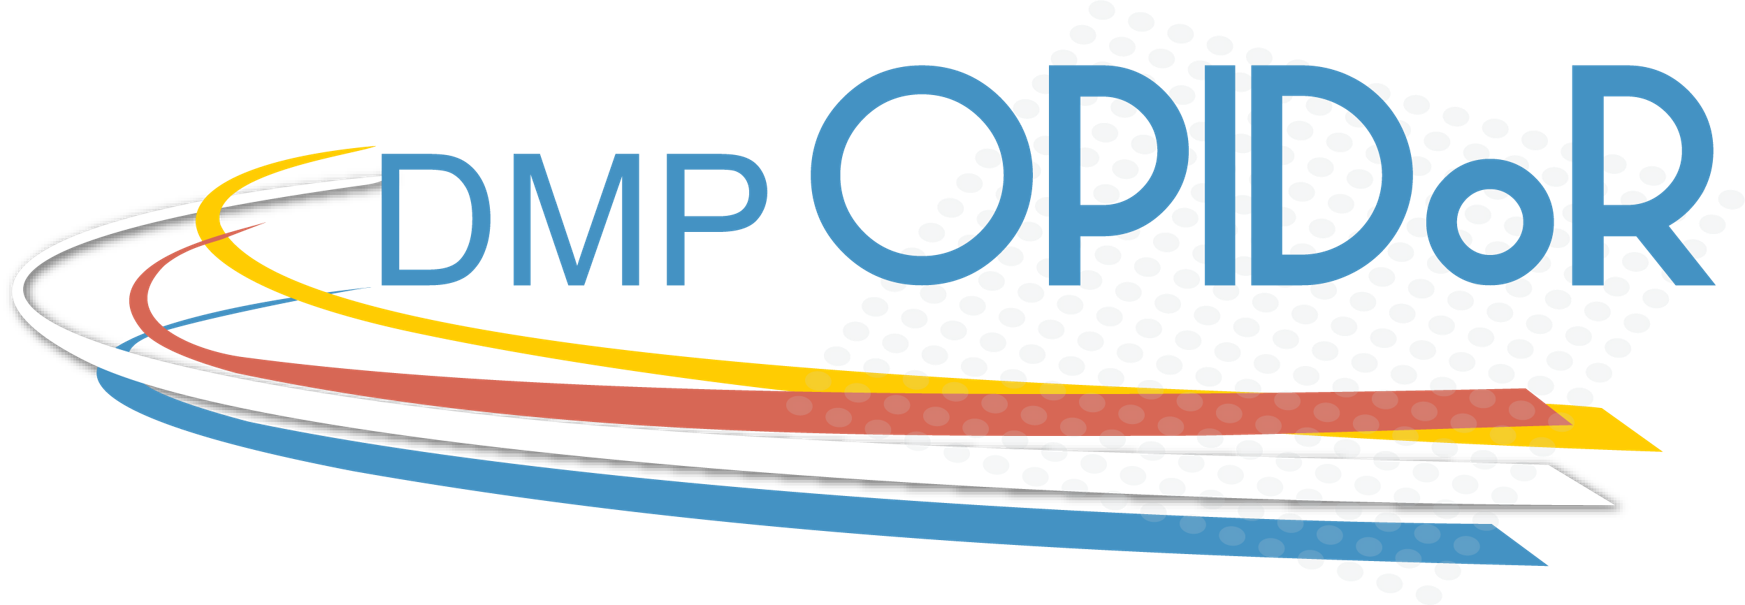 DMP OPIDoR logo